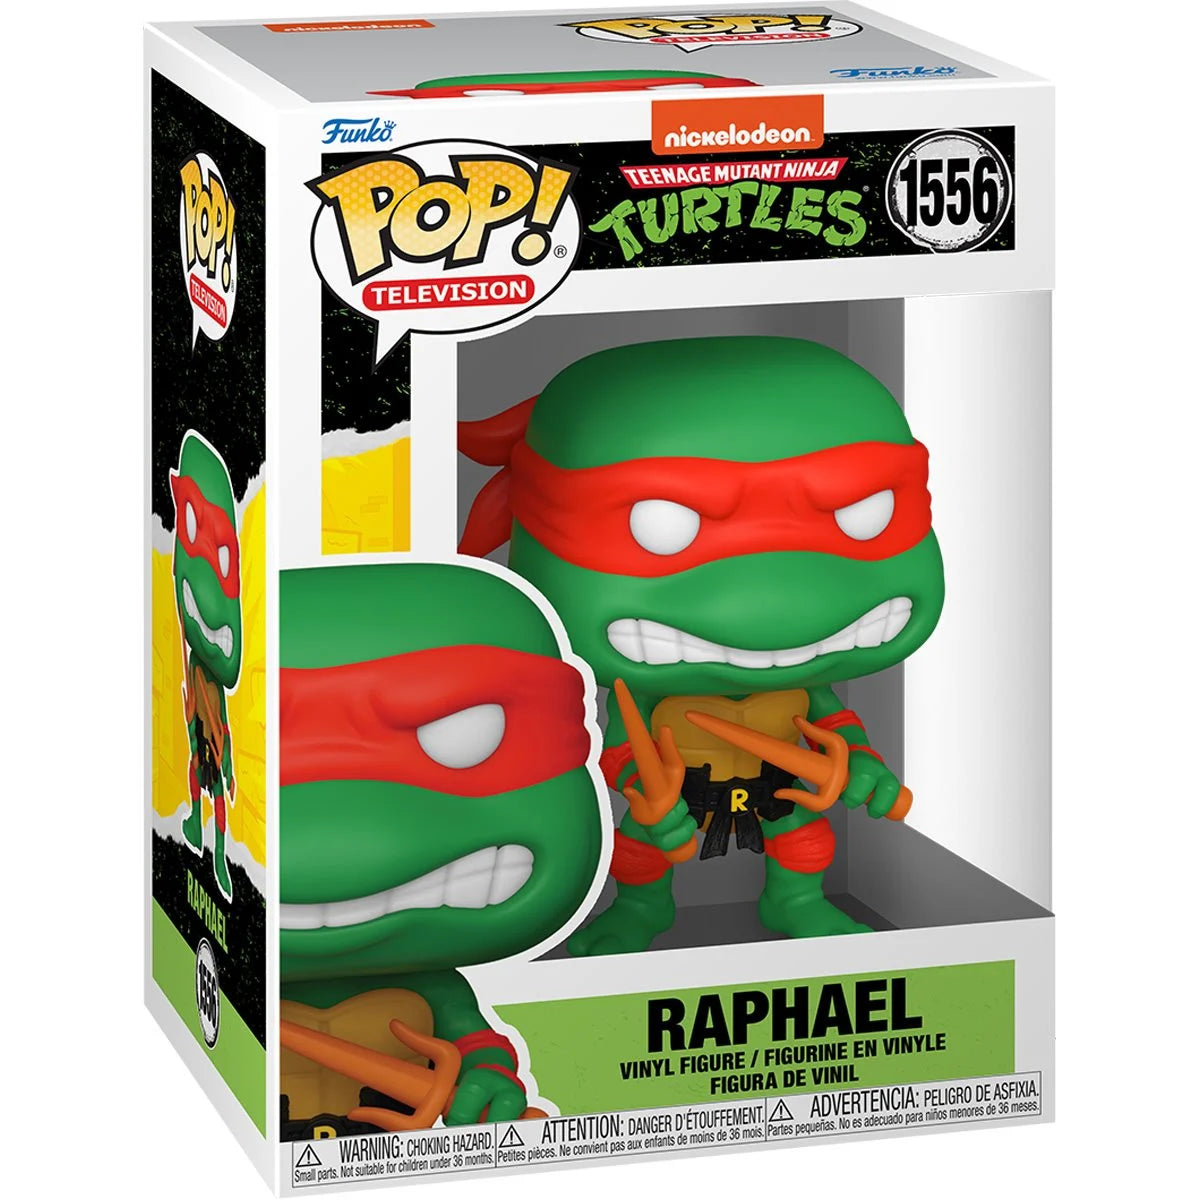 TMNT Raphael with Sais (Pre-Order!)